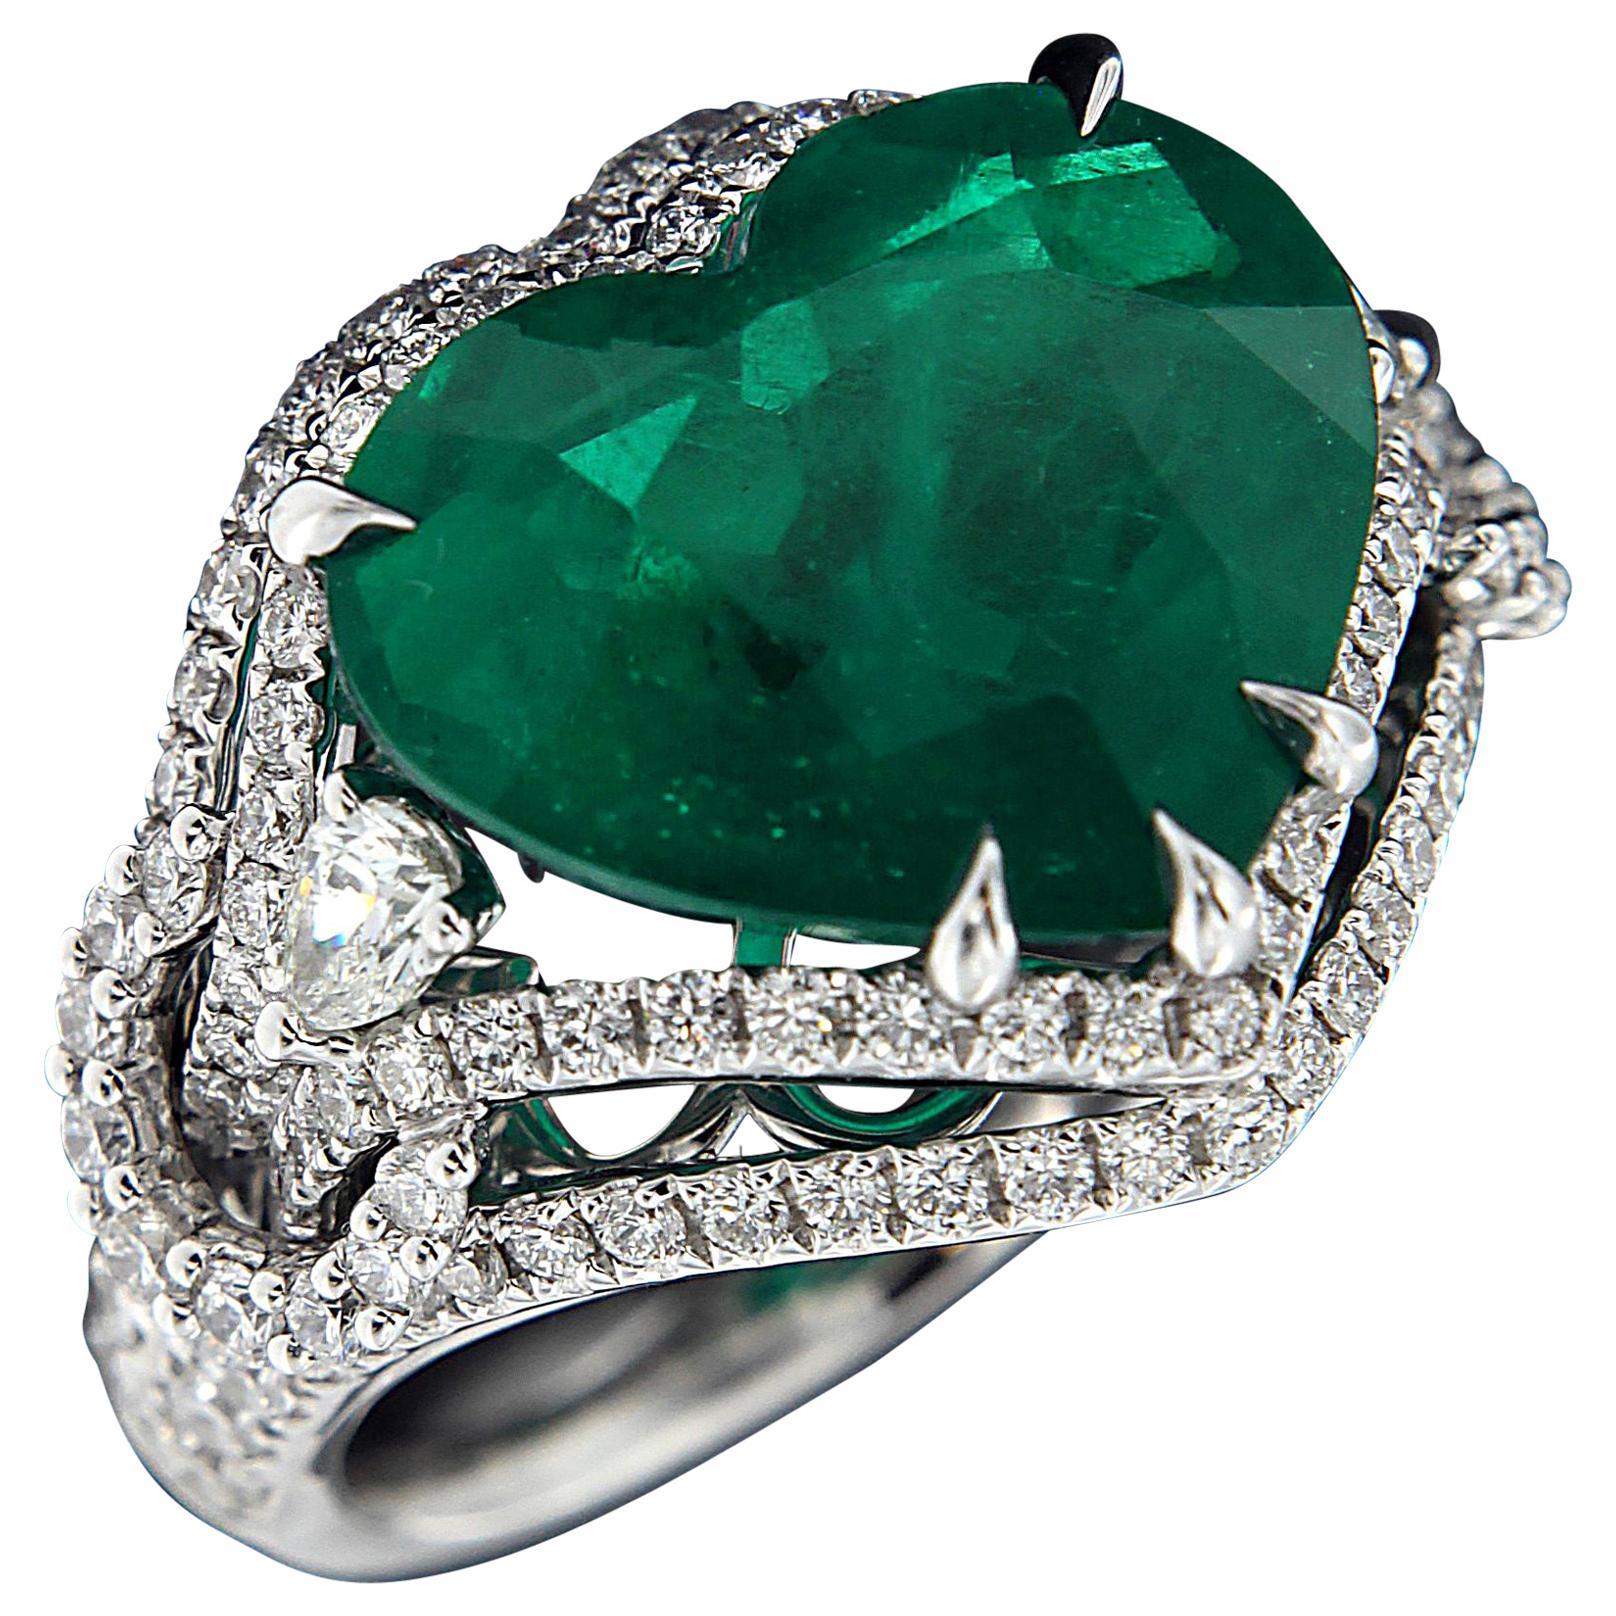 Breathtaking 18 Karat White Gold, Diamond and Emerald Ring For Sale